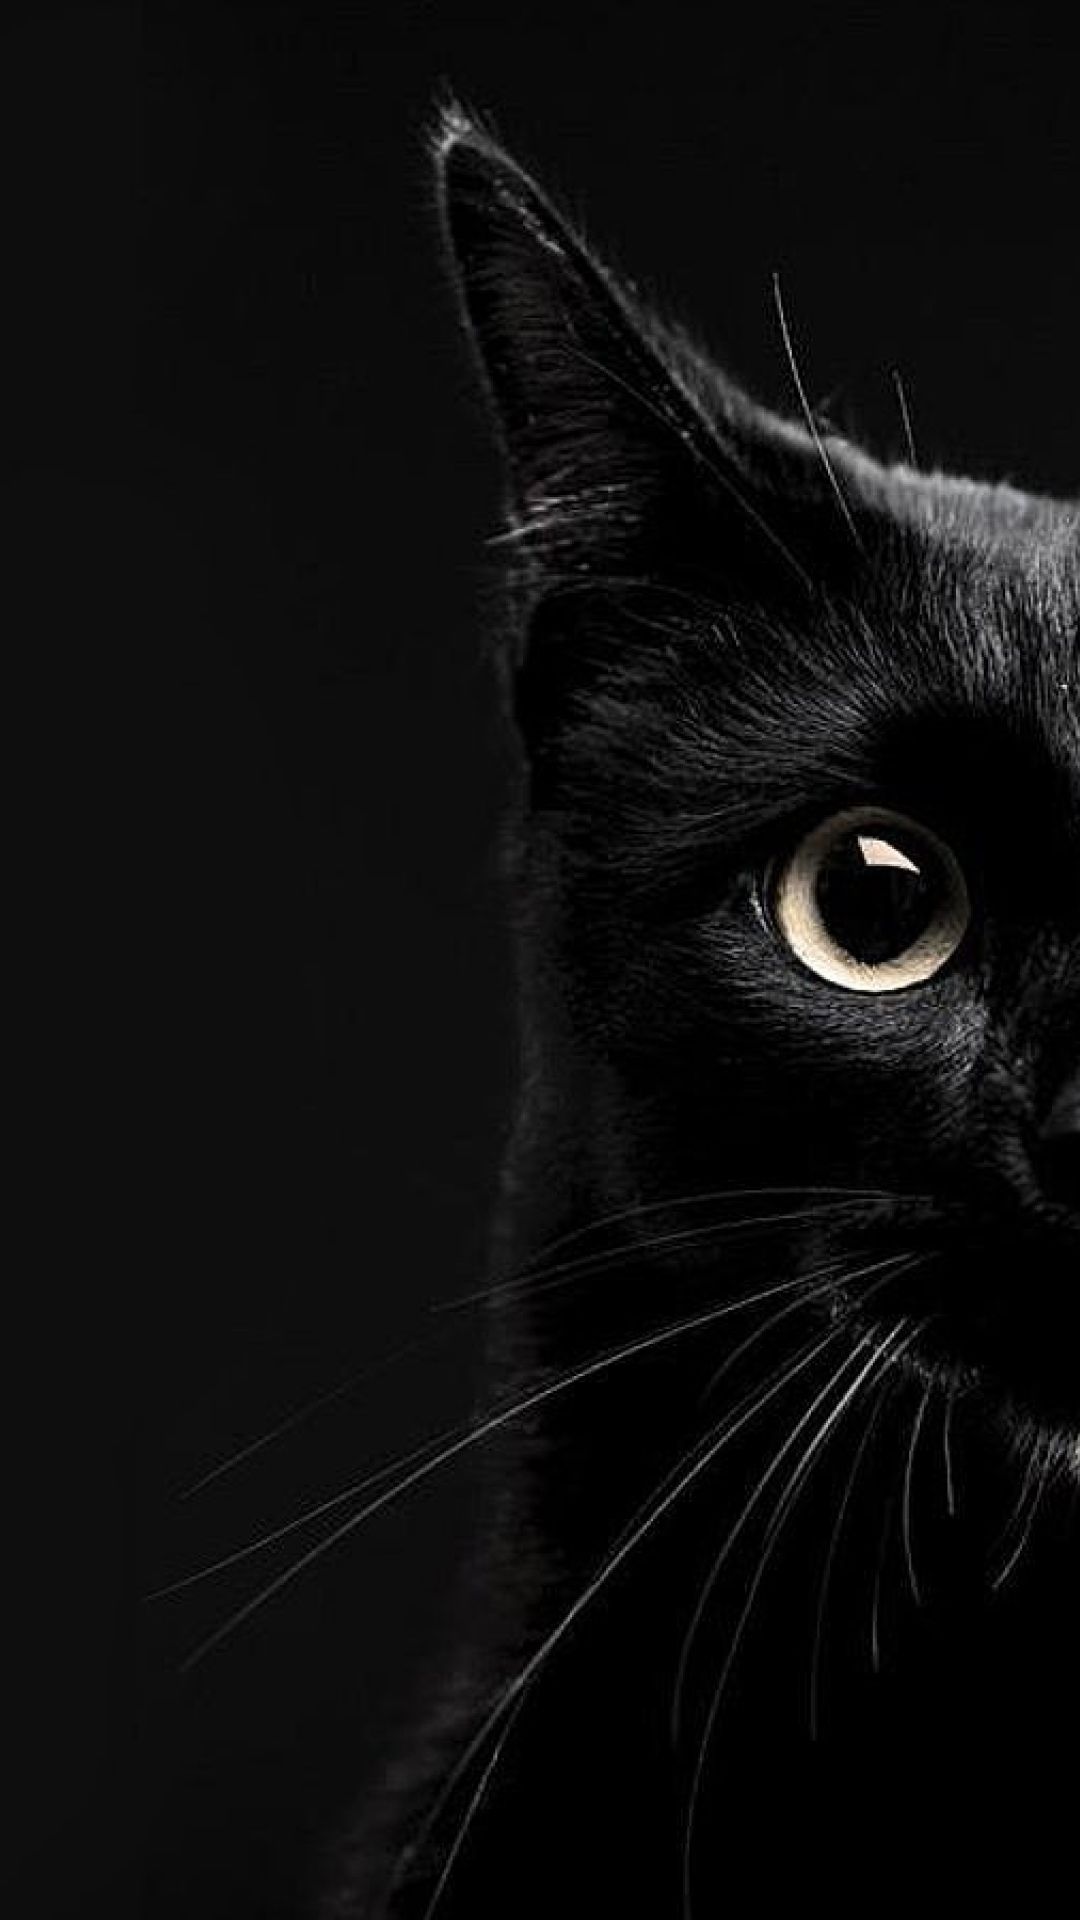 ✓[200+] Black Cat Wallpaper - Android, iPhone, Desktop HD Backgrounds /  Wallpapers (1080p, 4k) (png / jpg) (2023)